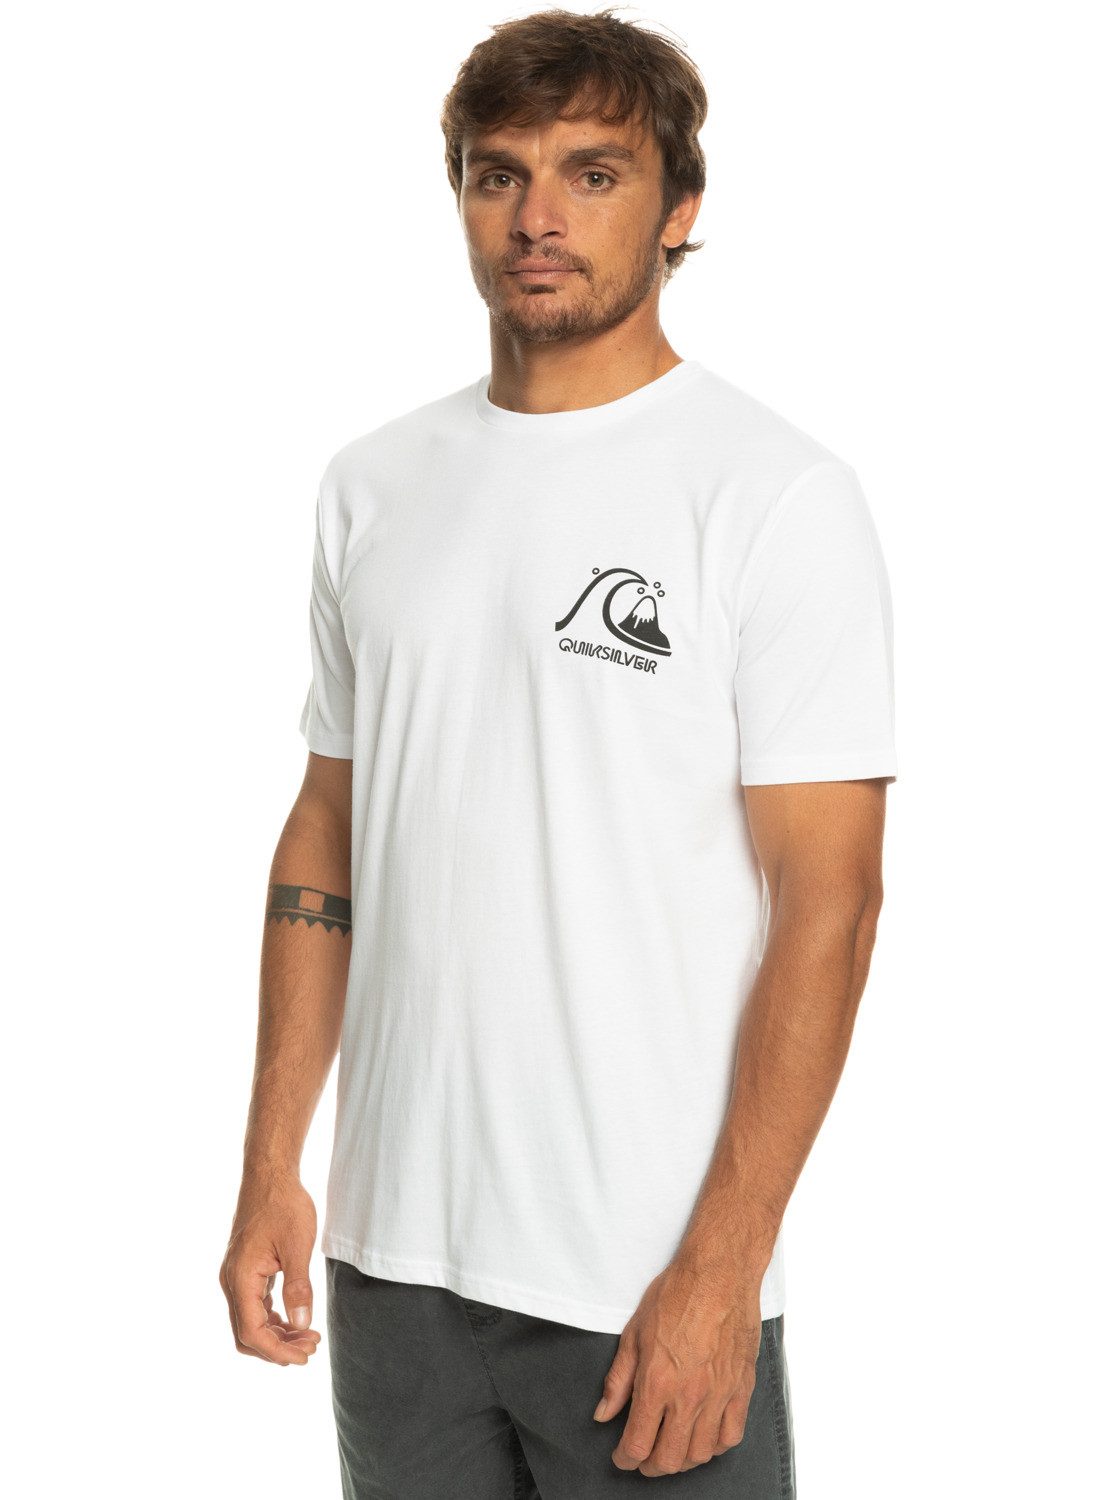 Quiksilver T-Shirt The Original White